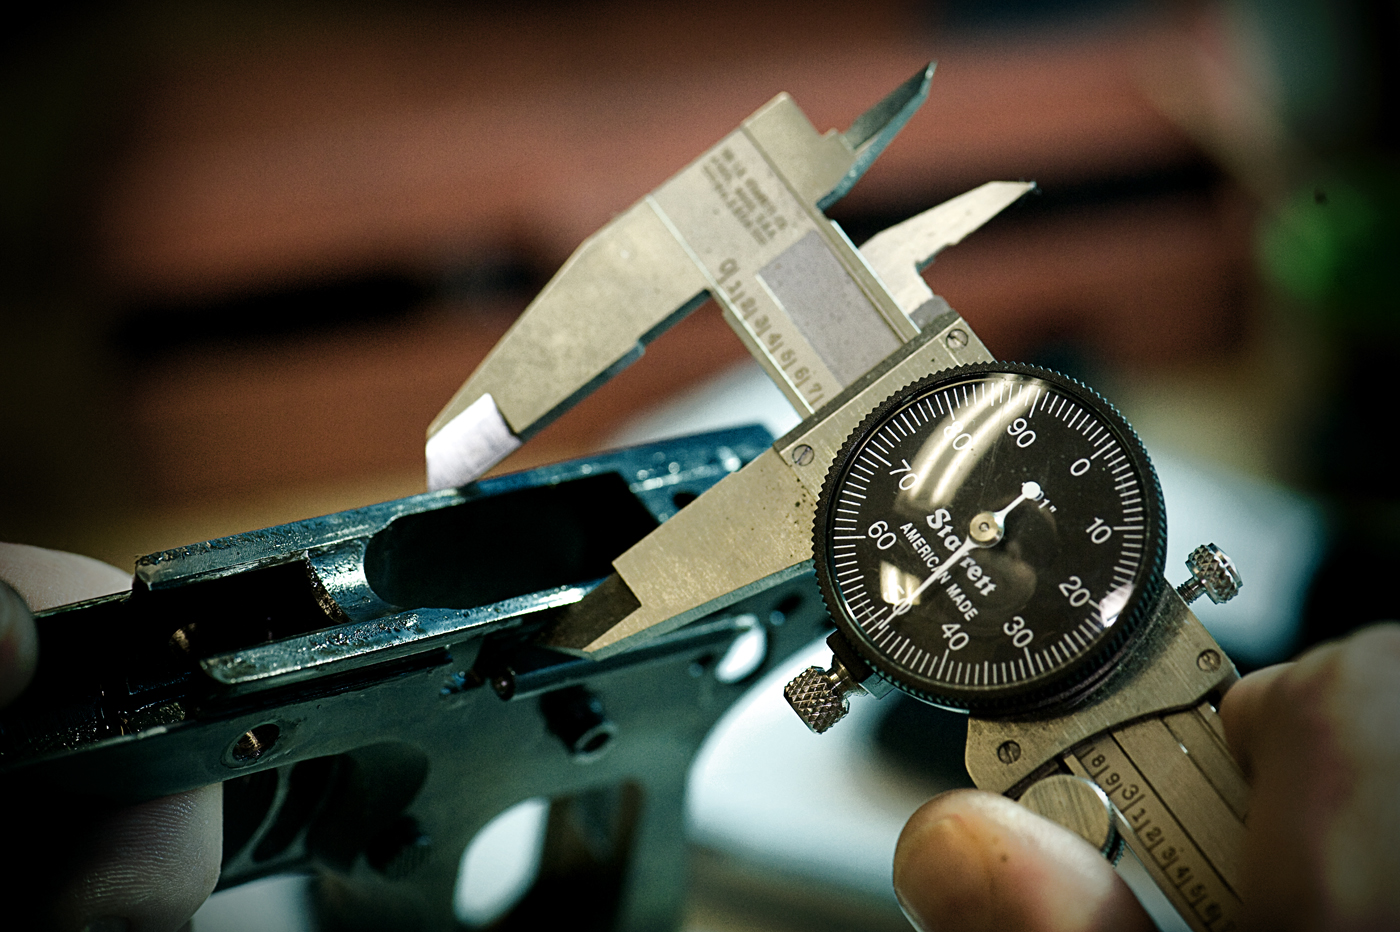 THROUGH THE EYES OF A GUNSMITH - Master craftsman makes weapons safe